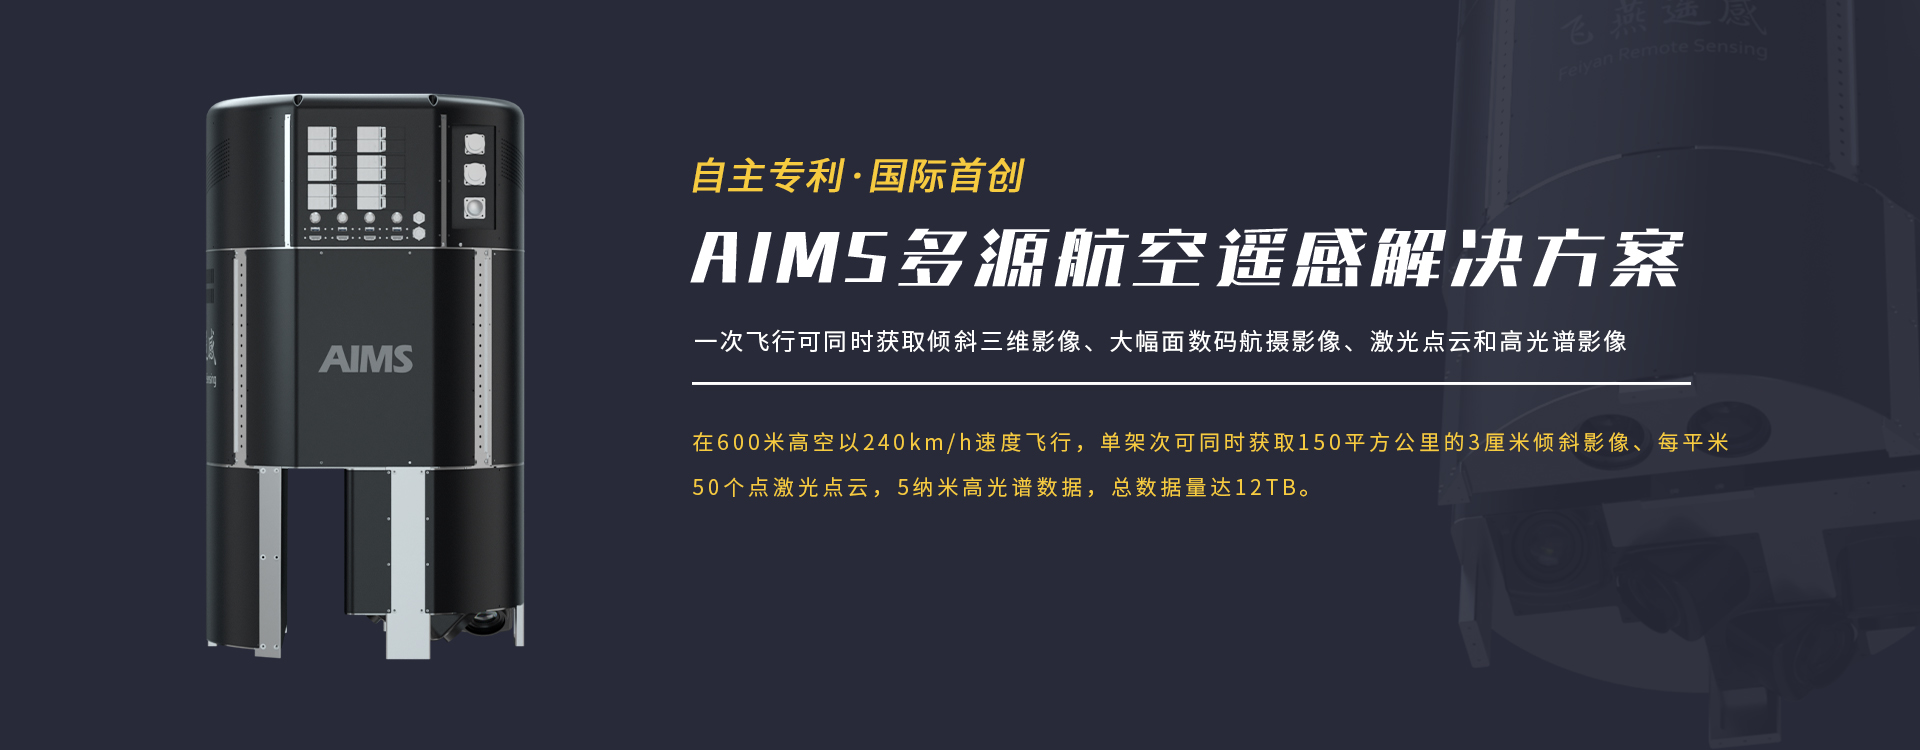 aims